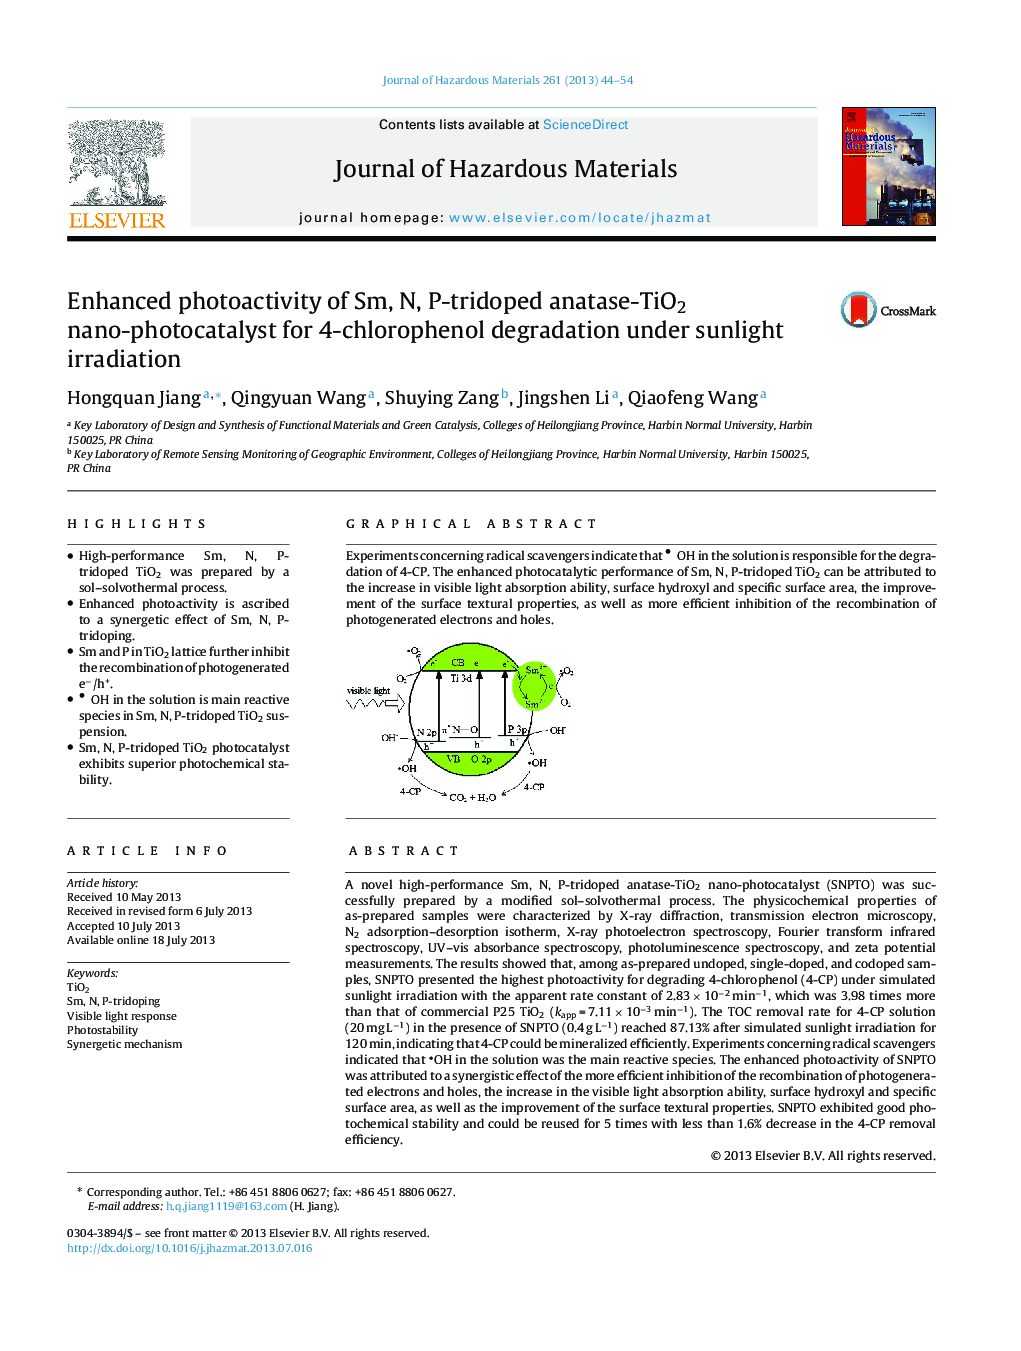 Enhanced photoactivity of Sm, N, P-tridoped anatase-TiO2 nano-photocatalyst for 4-chlorophenol degradation under sunlight irradiation